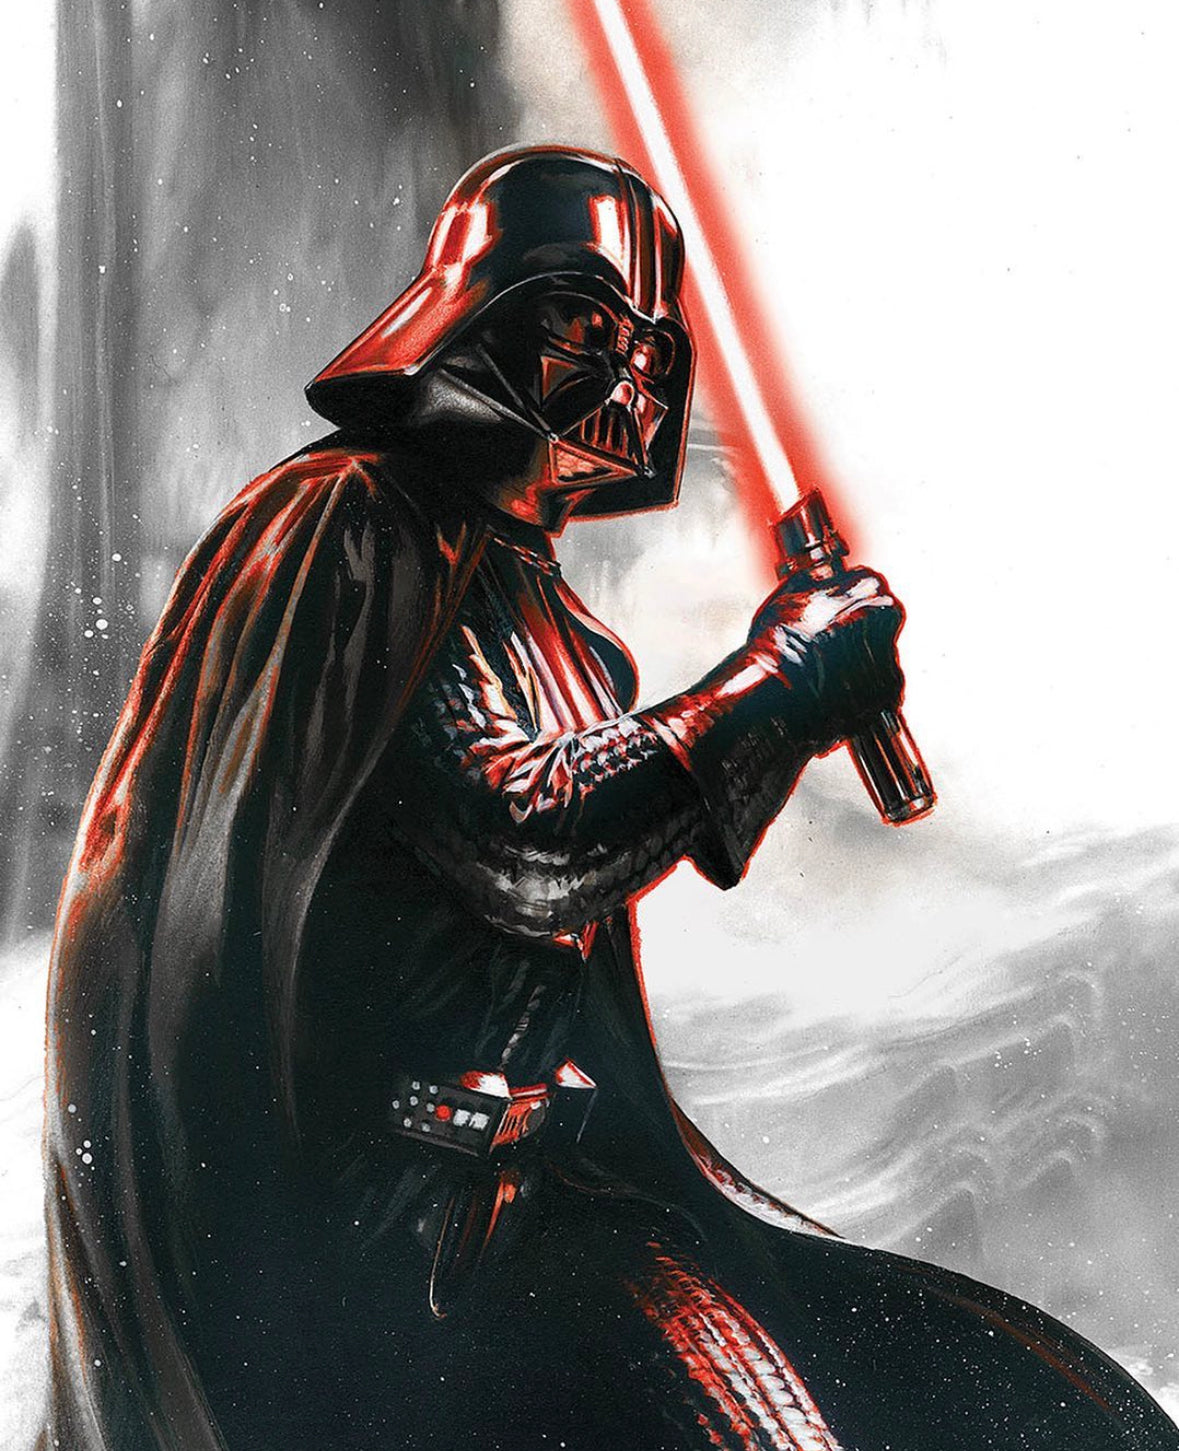 Star Wars: Darth Vader - Black, White & Red (2023) #1